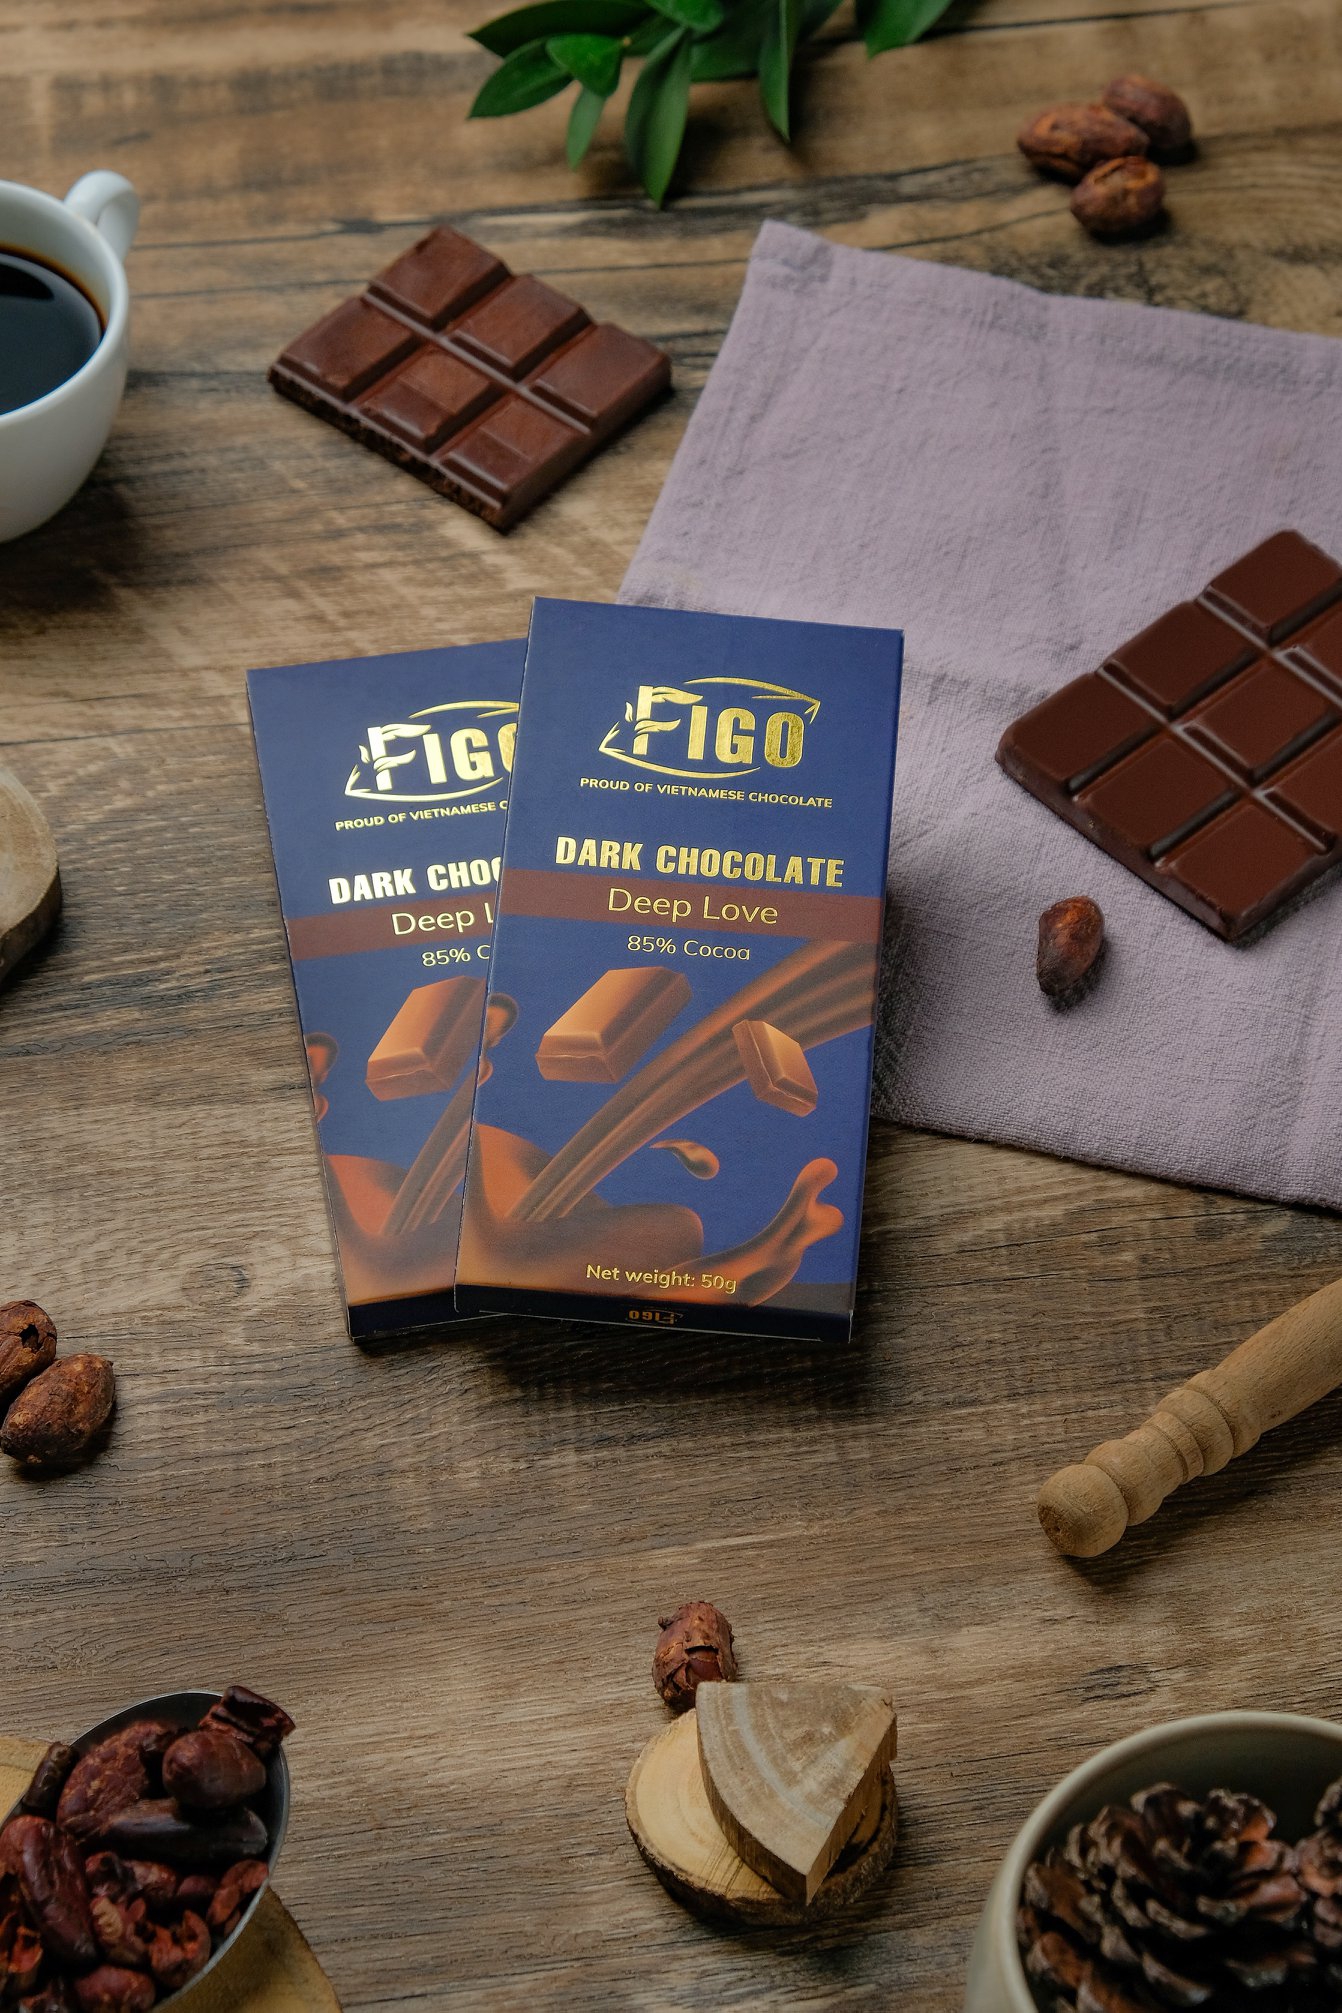 (Bar 50g) Combo 2 Socola đen 85% cacao ít đường dòng Deep Love 50g Figo - Vietnamese Chocolate